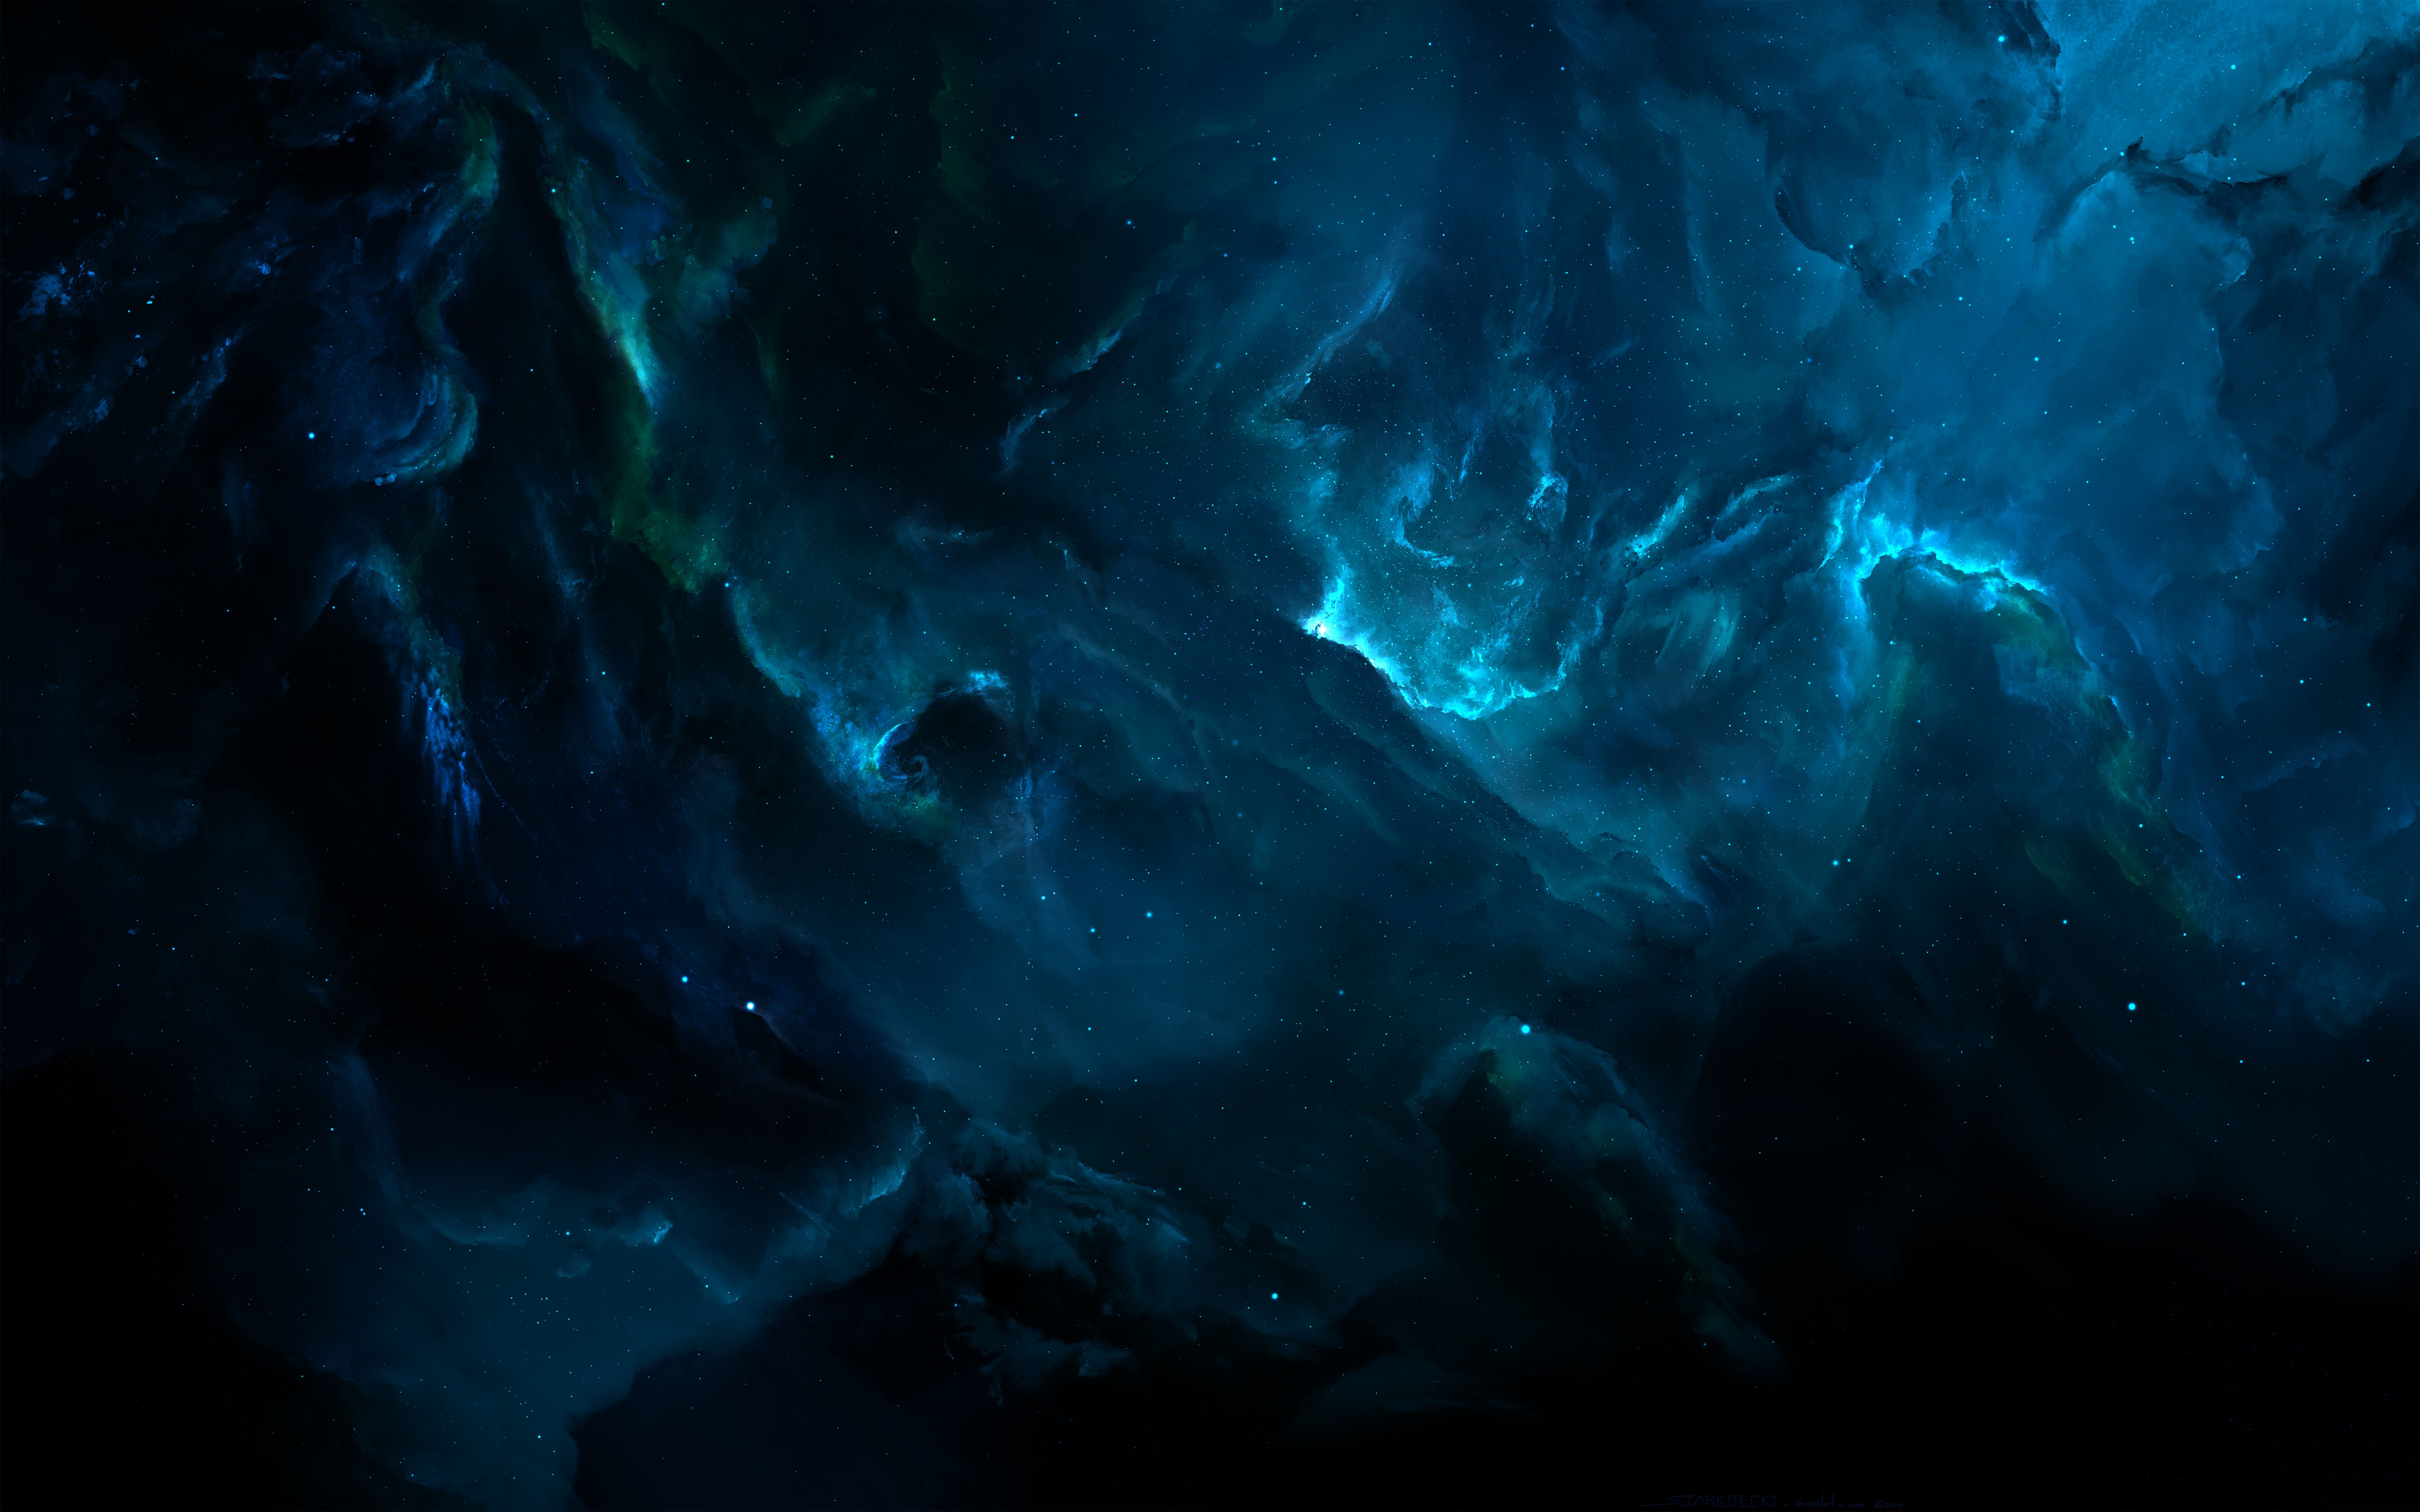 Atlantis Nebula #2 by Starkiteckt - 8000x5000 : wallpapers